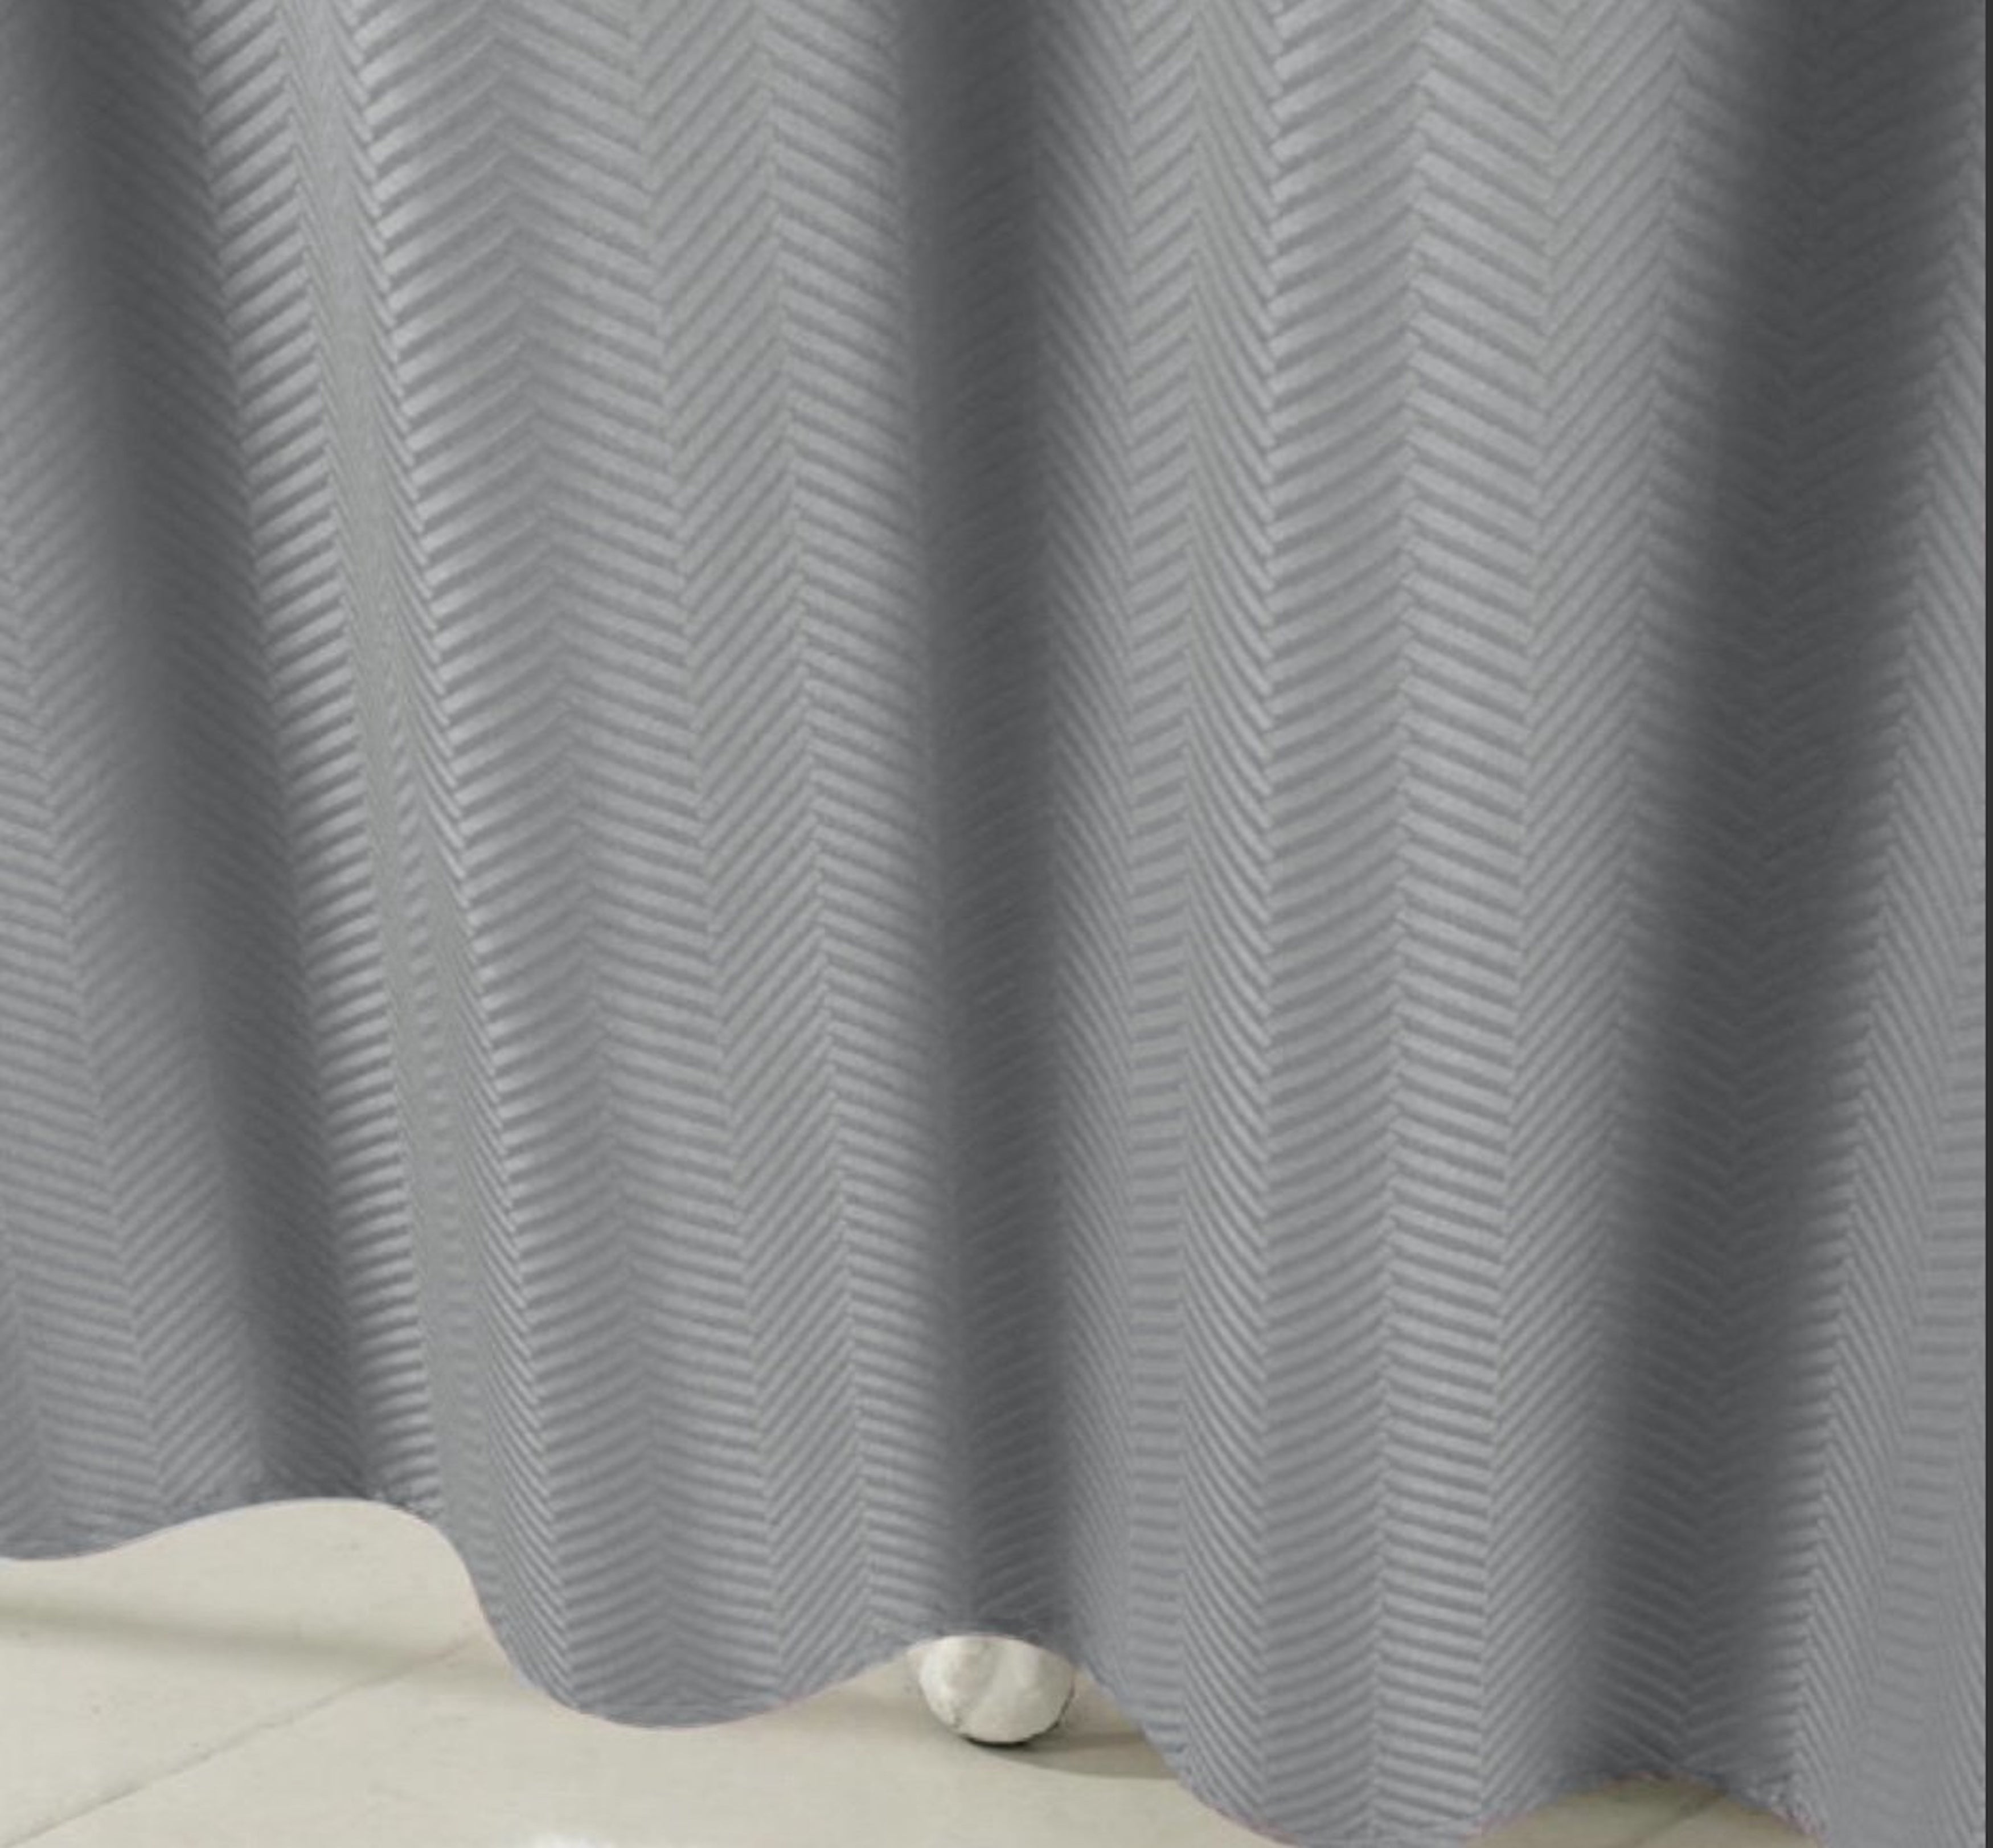 Dainty Home Latona Heavy Matelasse Fabric Shower Curtain with Cotton Feel and Chevron Pattern